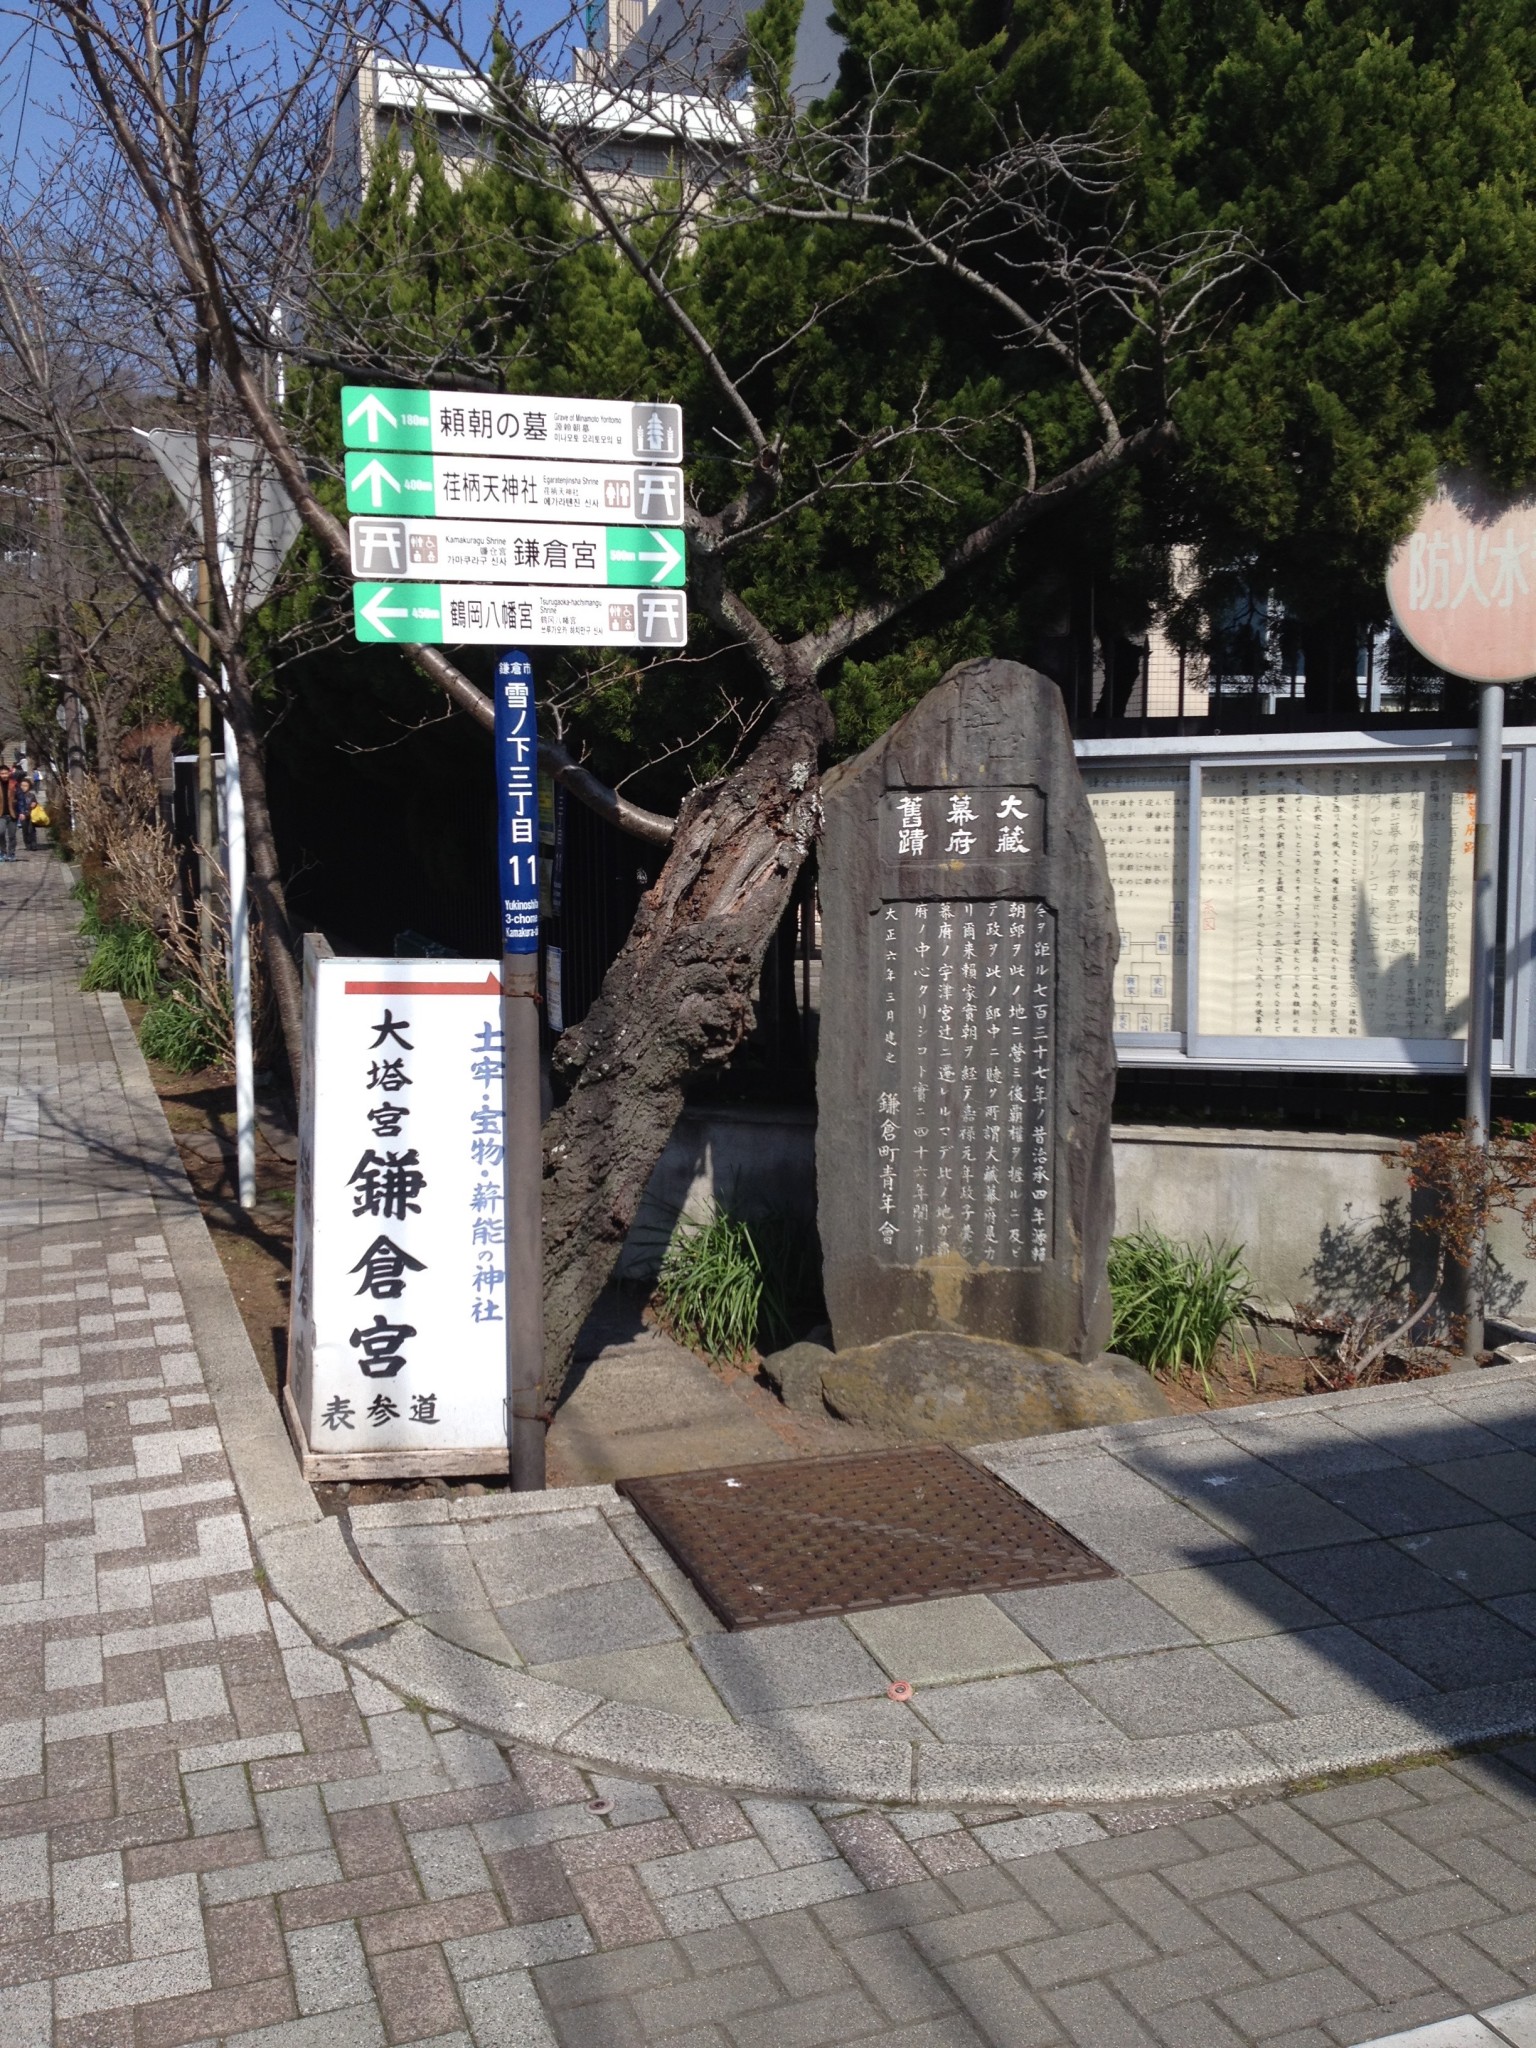 History hidden at Minamoto no Yoritomo’s tomb in Kamakura